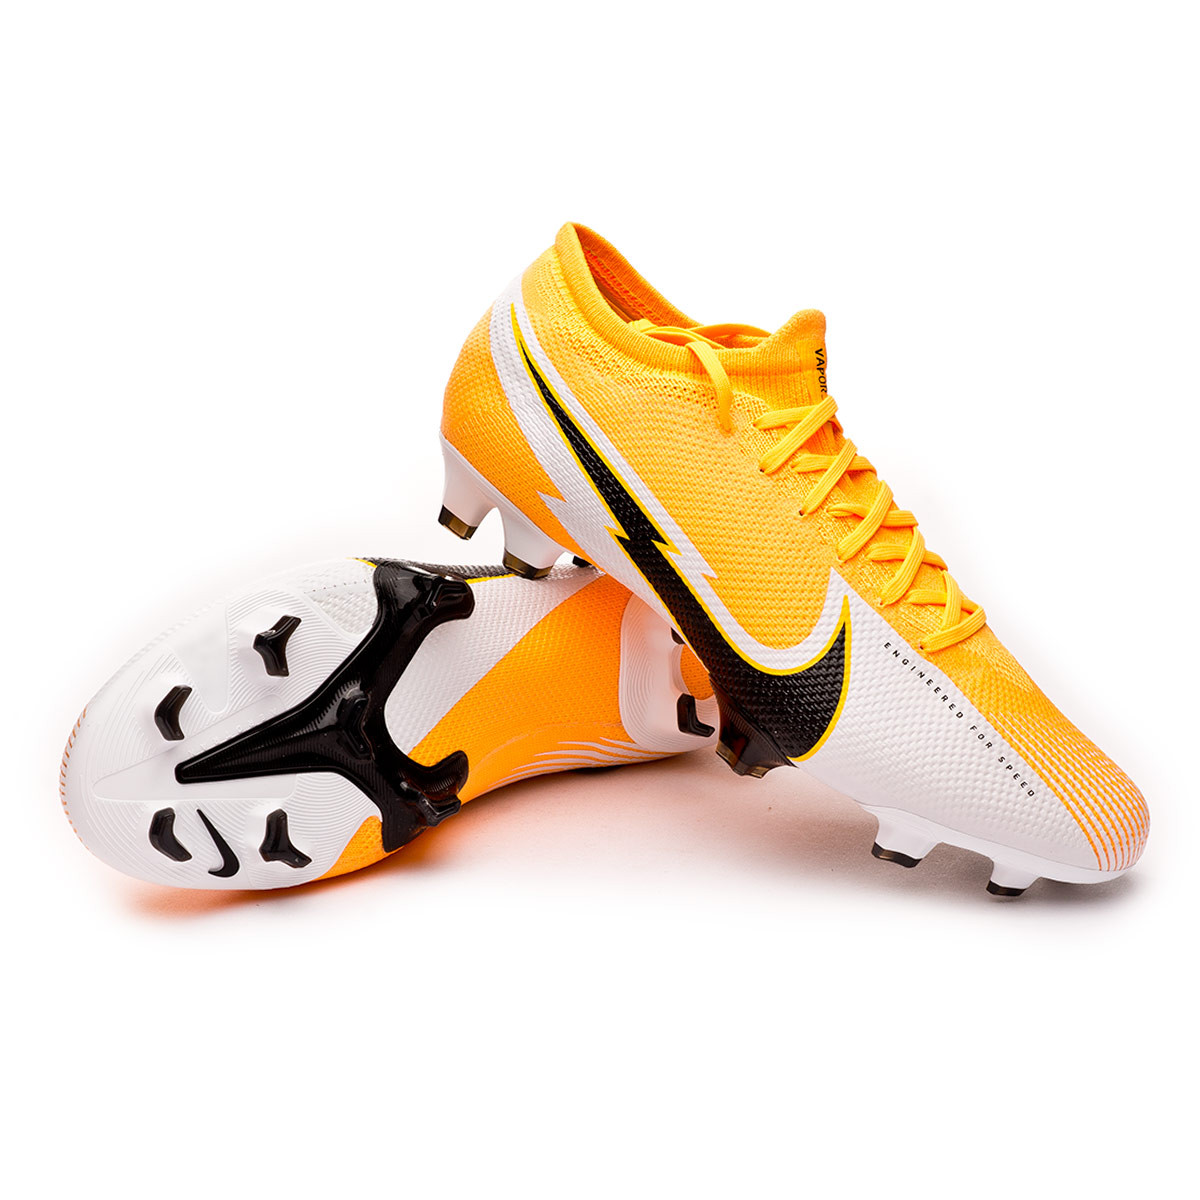 Football Boots Nike Mercurial Vapor XIII Pro FG Laser  orange-Black-White-Laser orange - Football store Fútbol Emotion